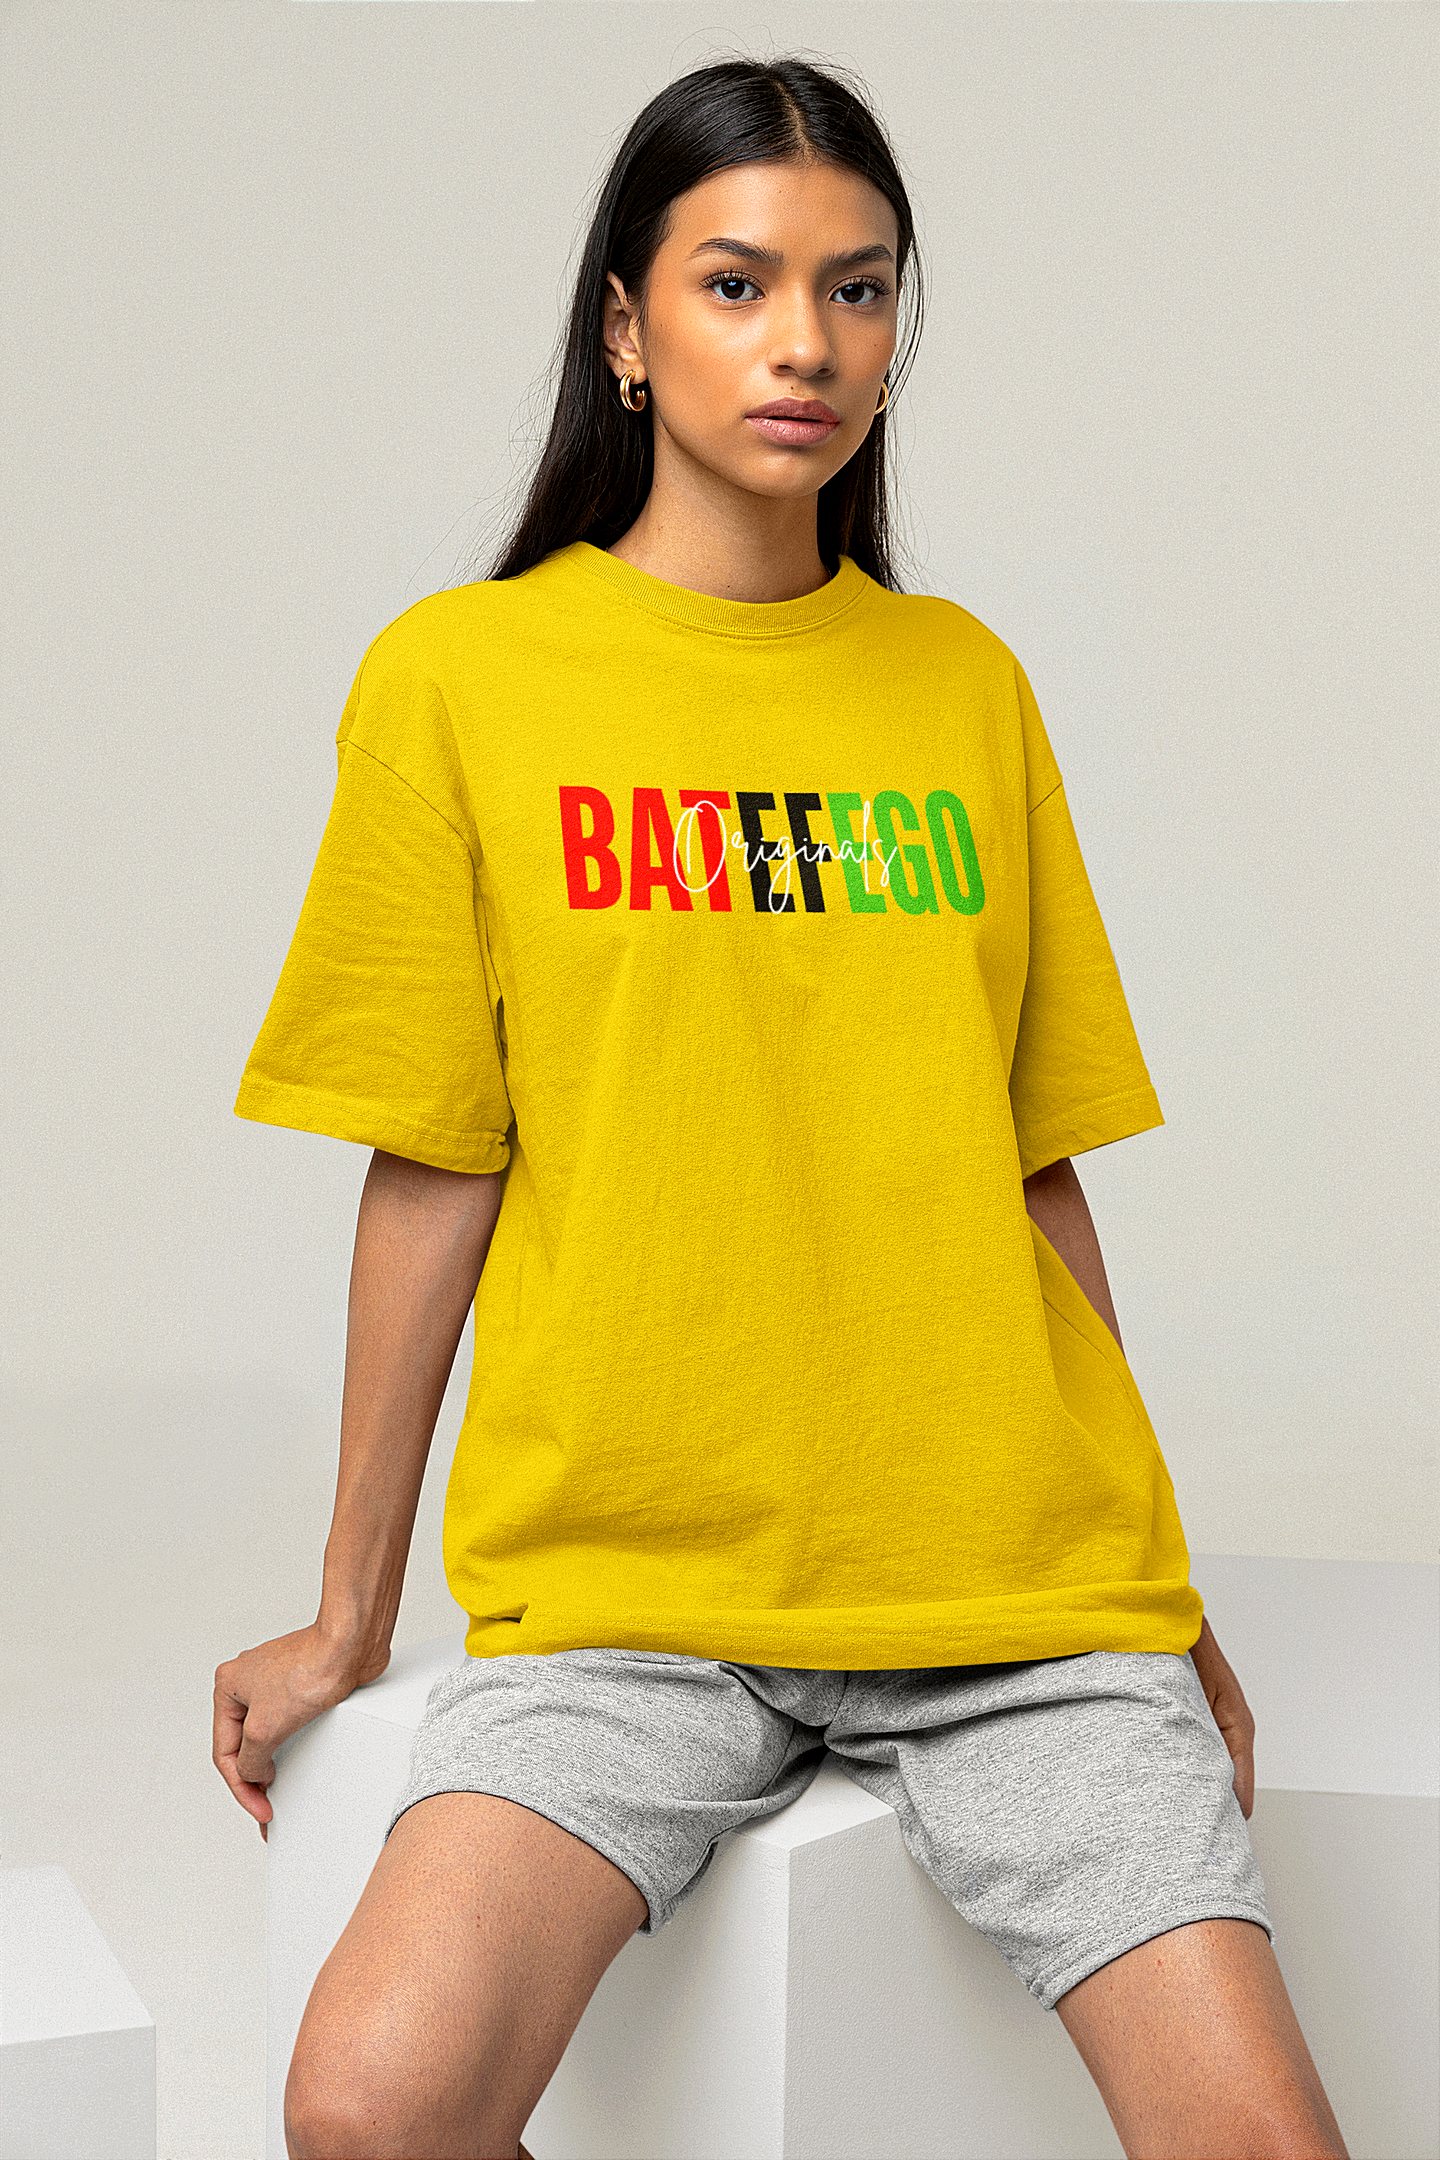 Batefego For the contemporary african community 24 Tshirt 5 2 - batefego streetwear fashion